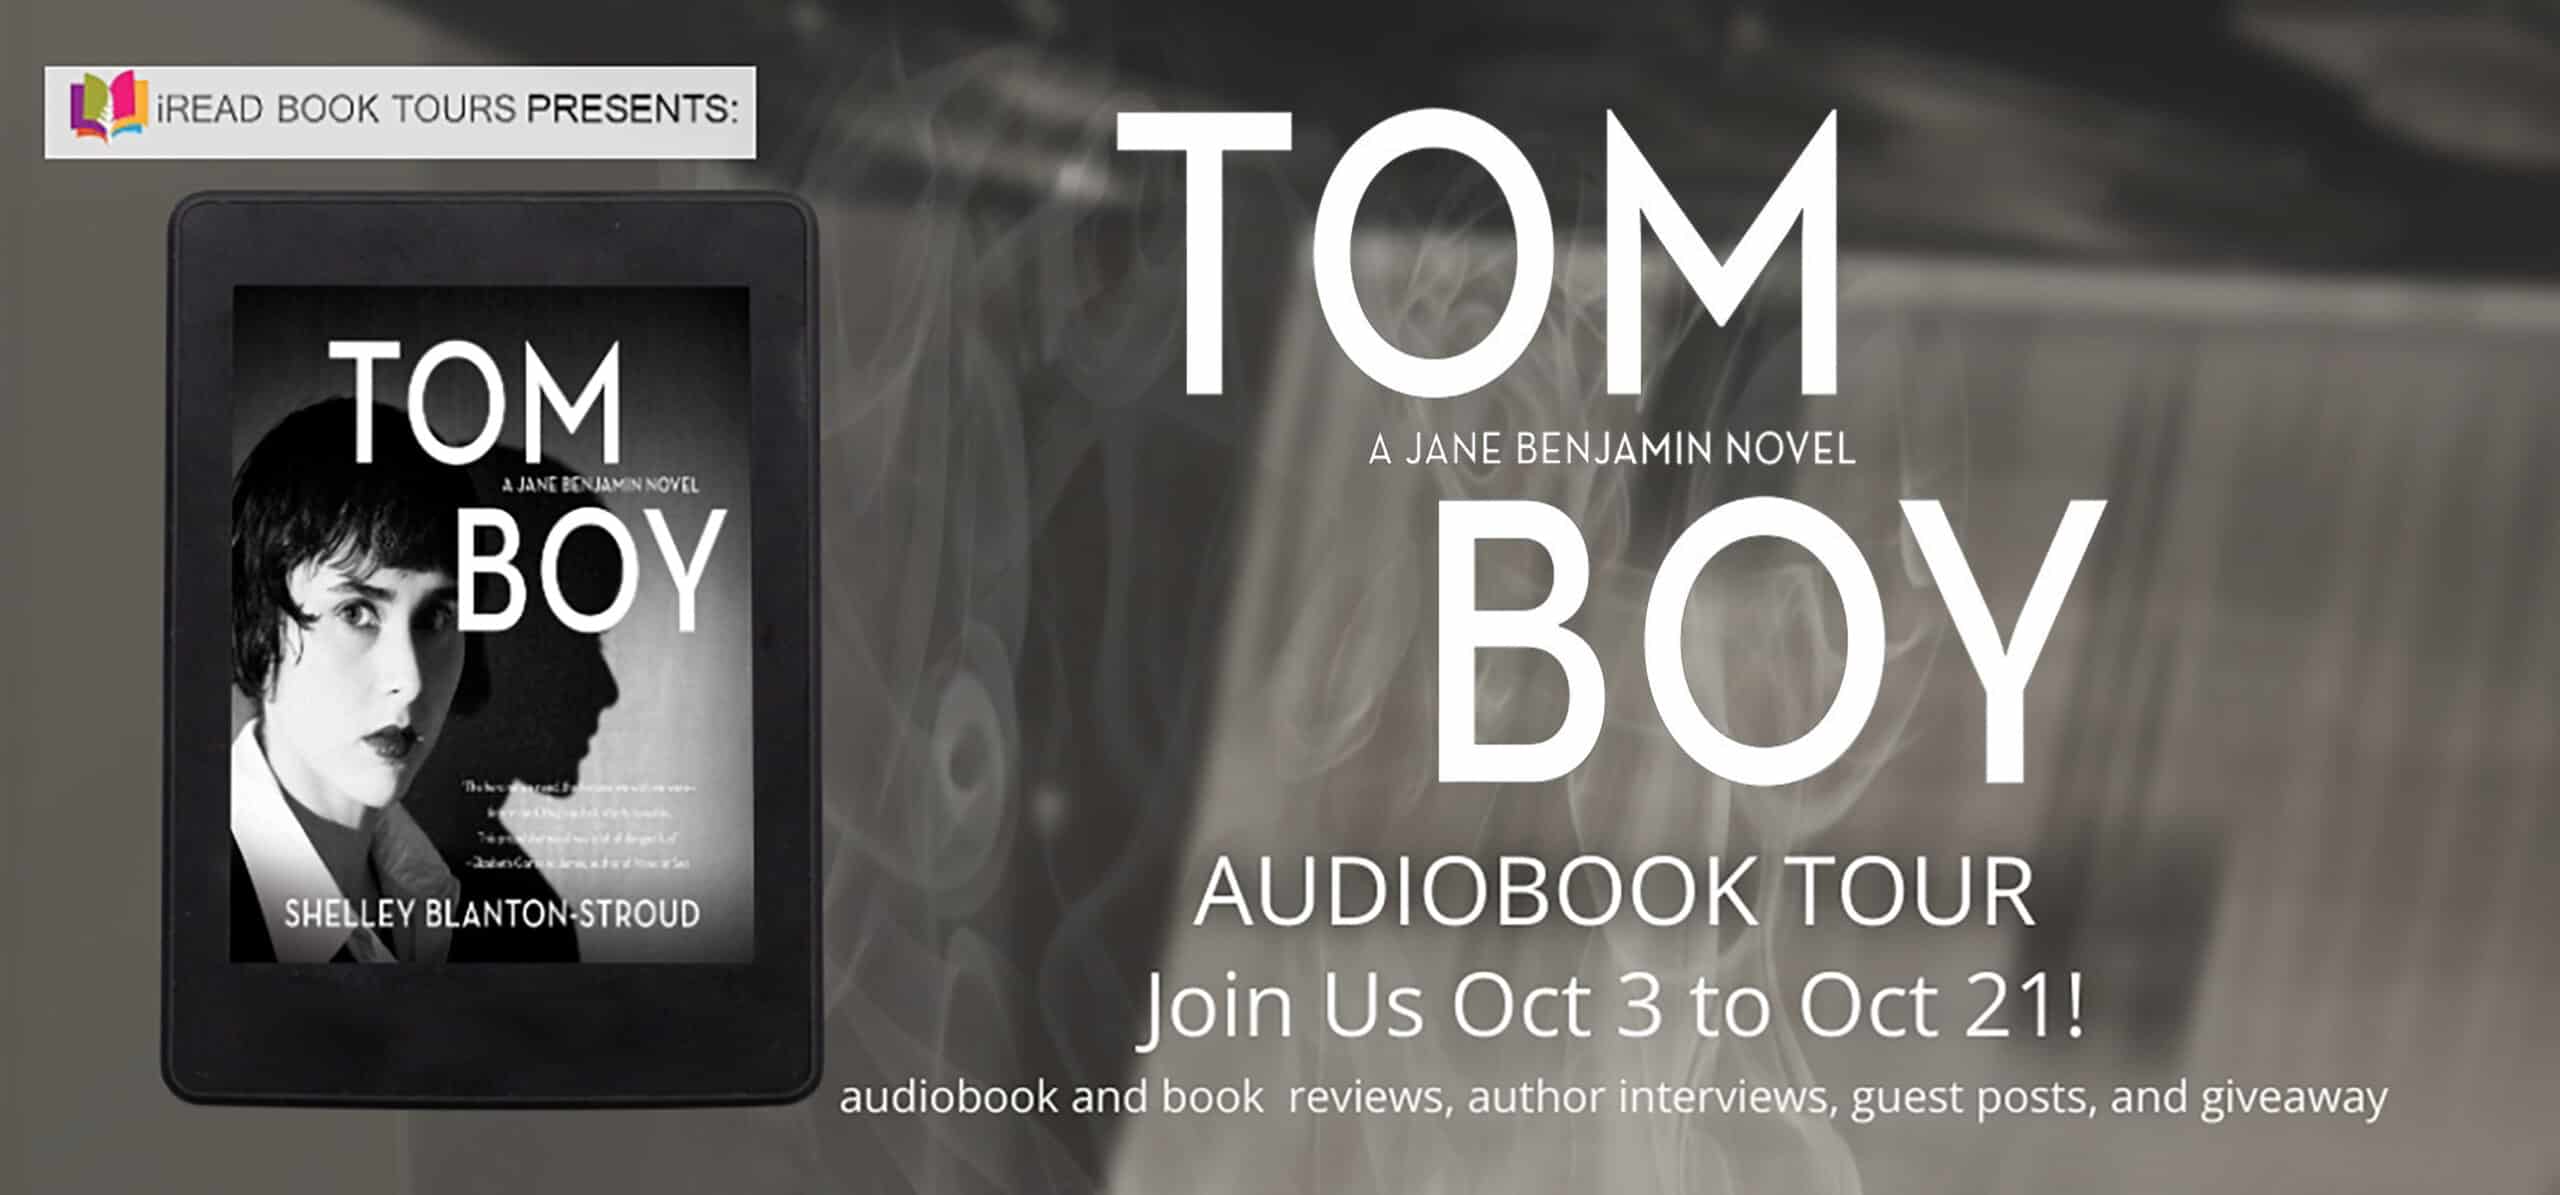 Tomboy: A Jane Benjamin Novel by Shelley Blanton-Stroud | Audiobook & Book Tour Spotlight | #HistoricalFiction #Thriller 